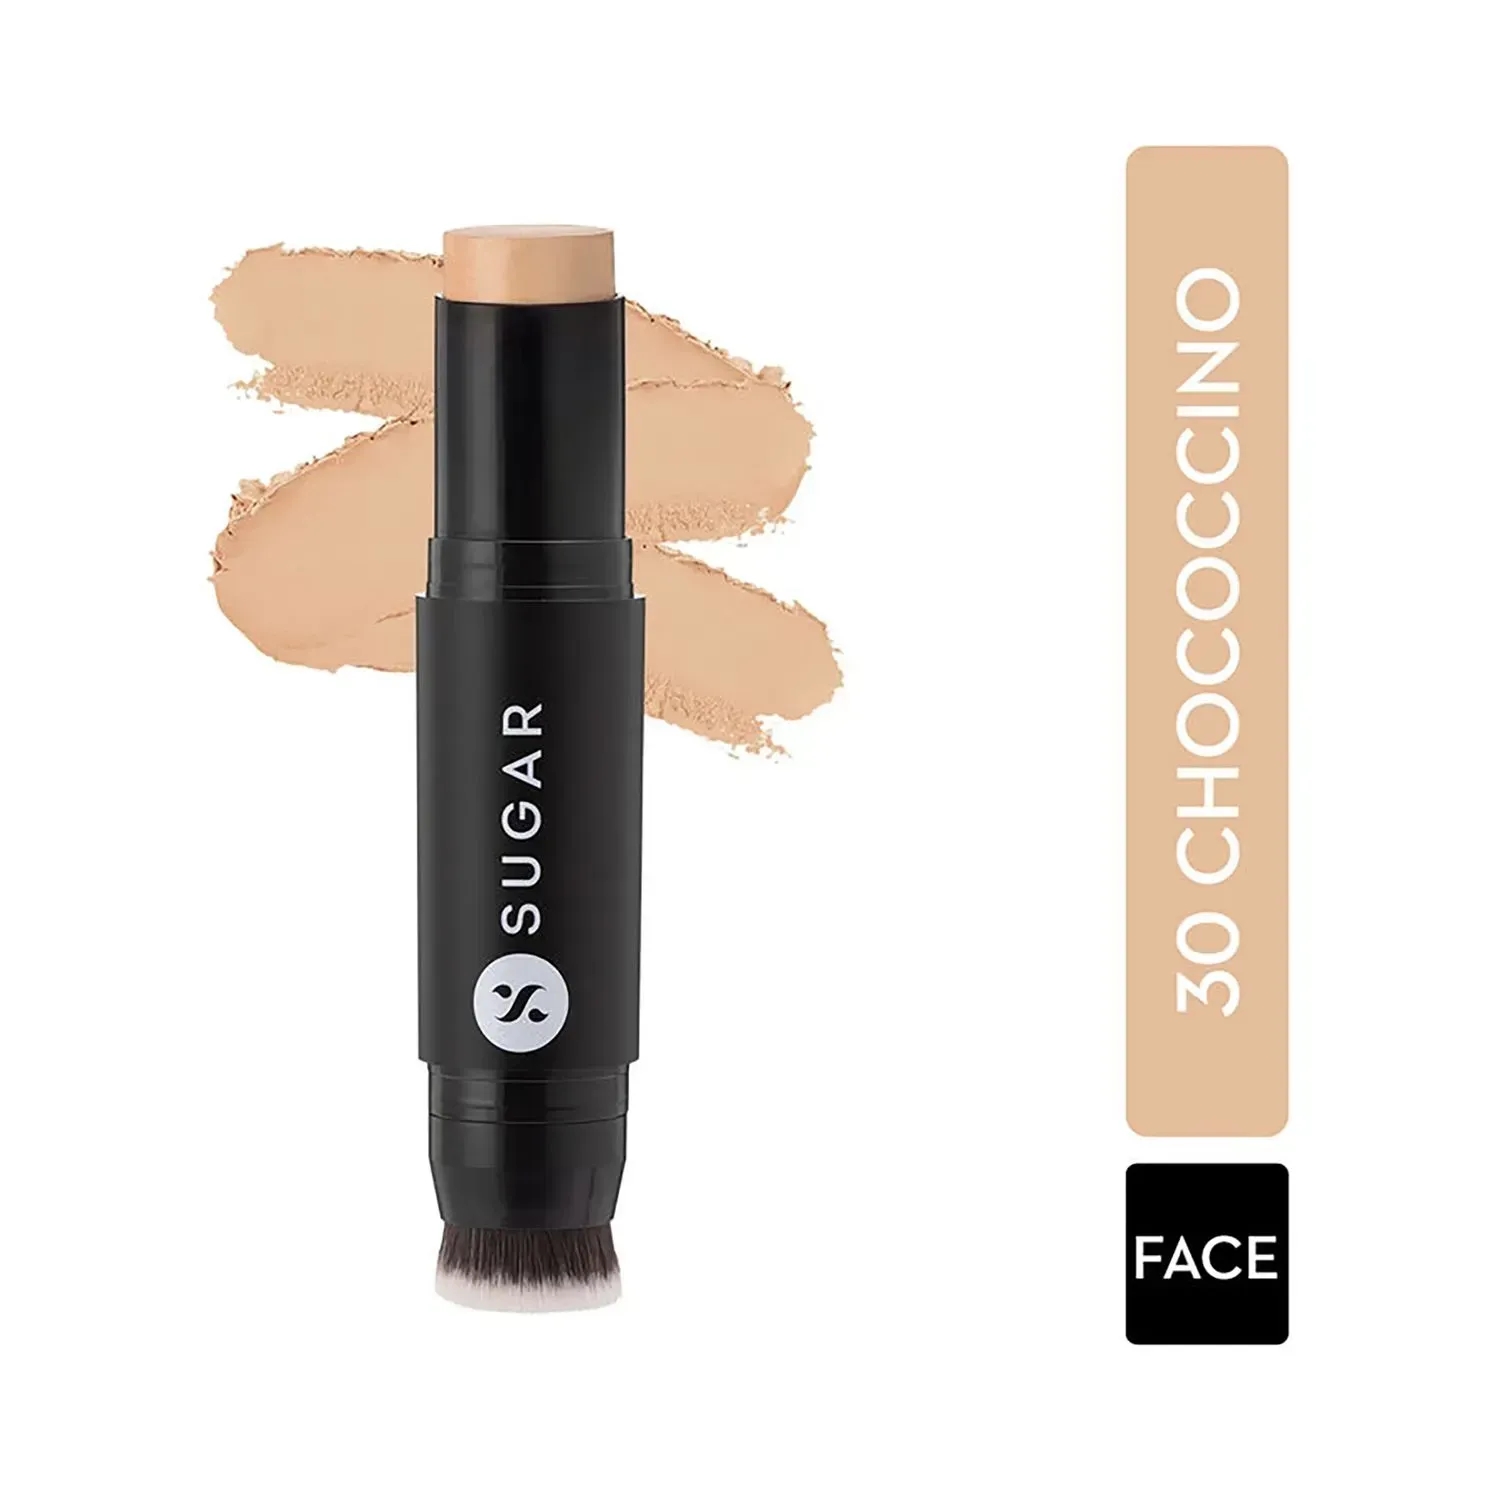 SUGAR Cosmetics | SUGAR Cosmetics Ace Of Face Foundation Stick With Inbuilt Brush - 30 Chococcino (Medium, Warm Undertone) (12g)